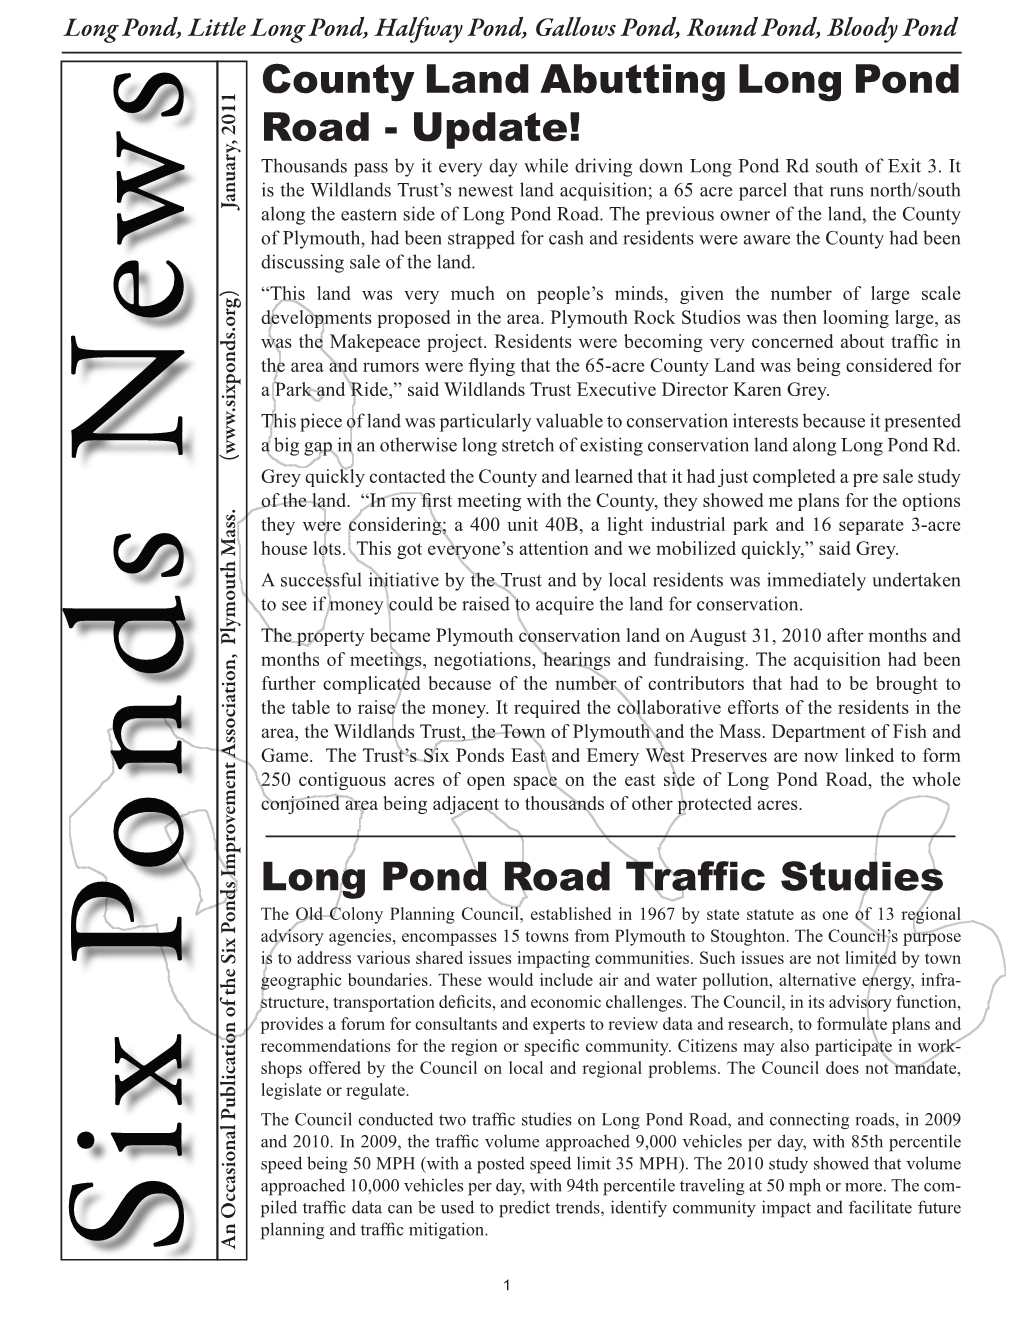 Long Pond Road Traffic Studies